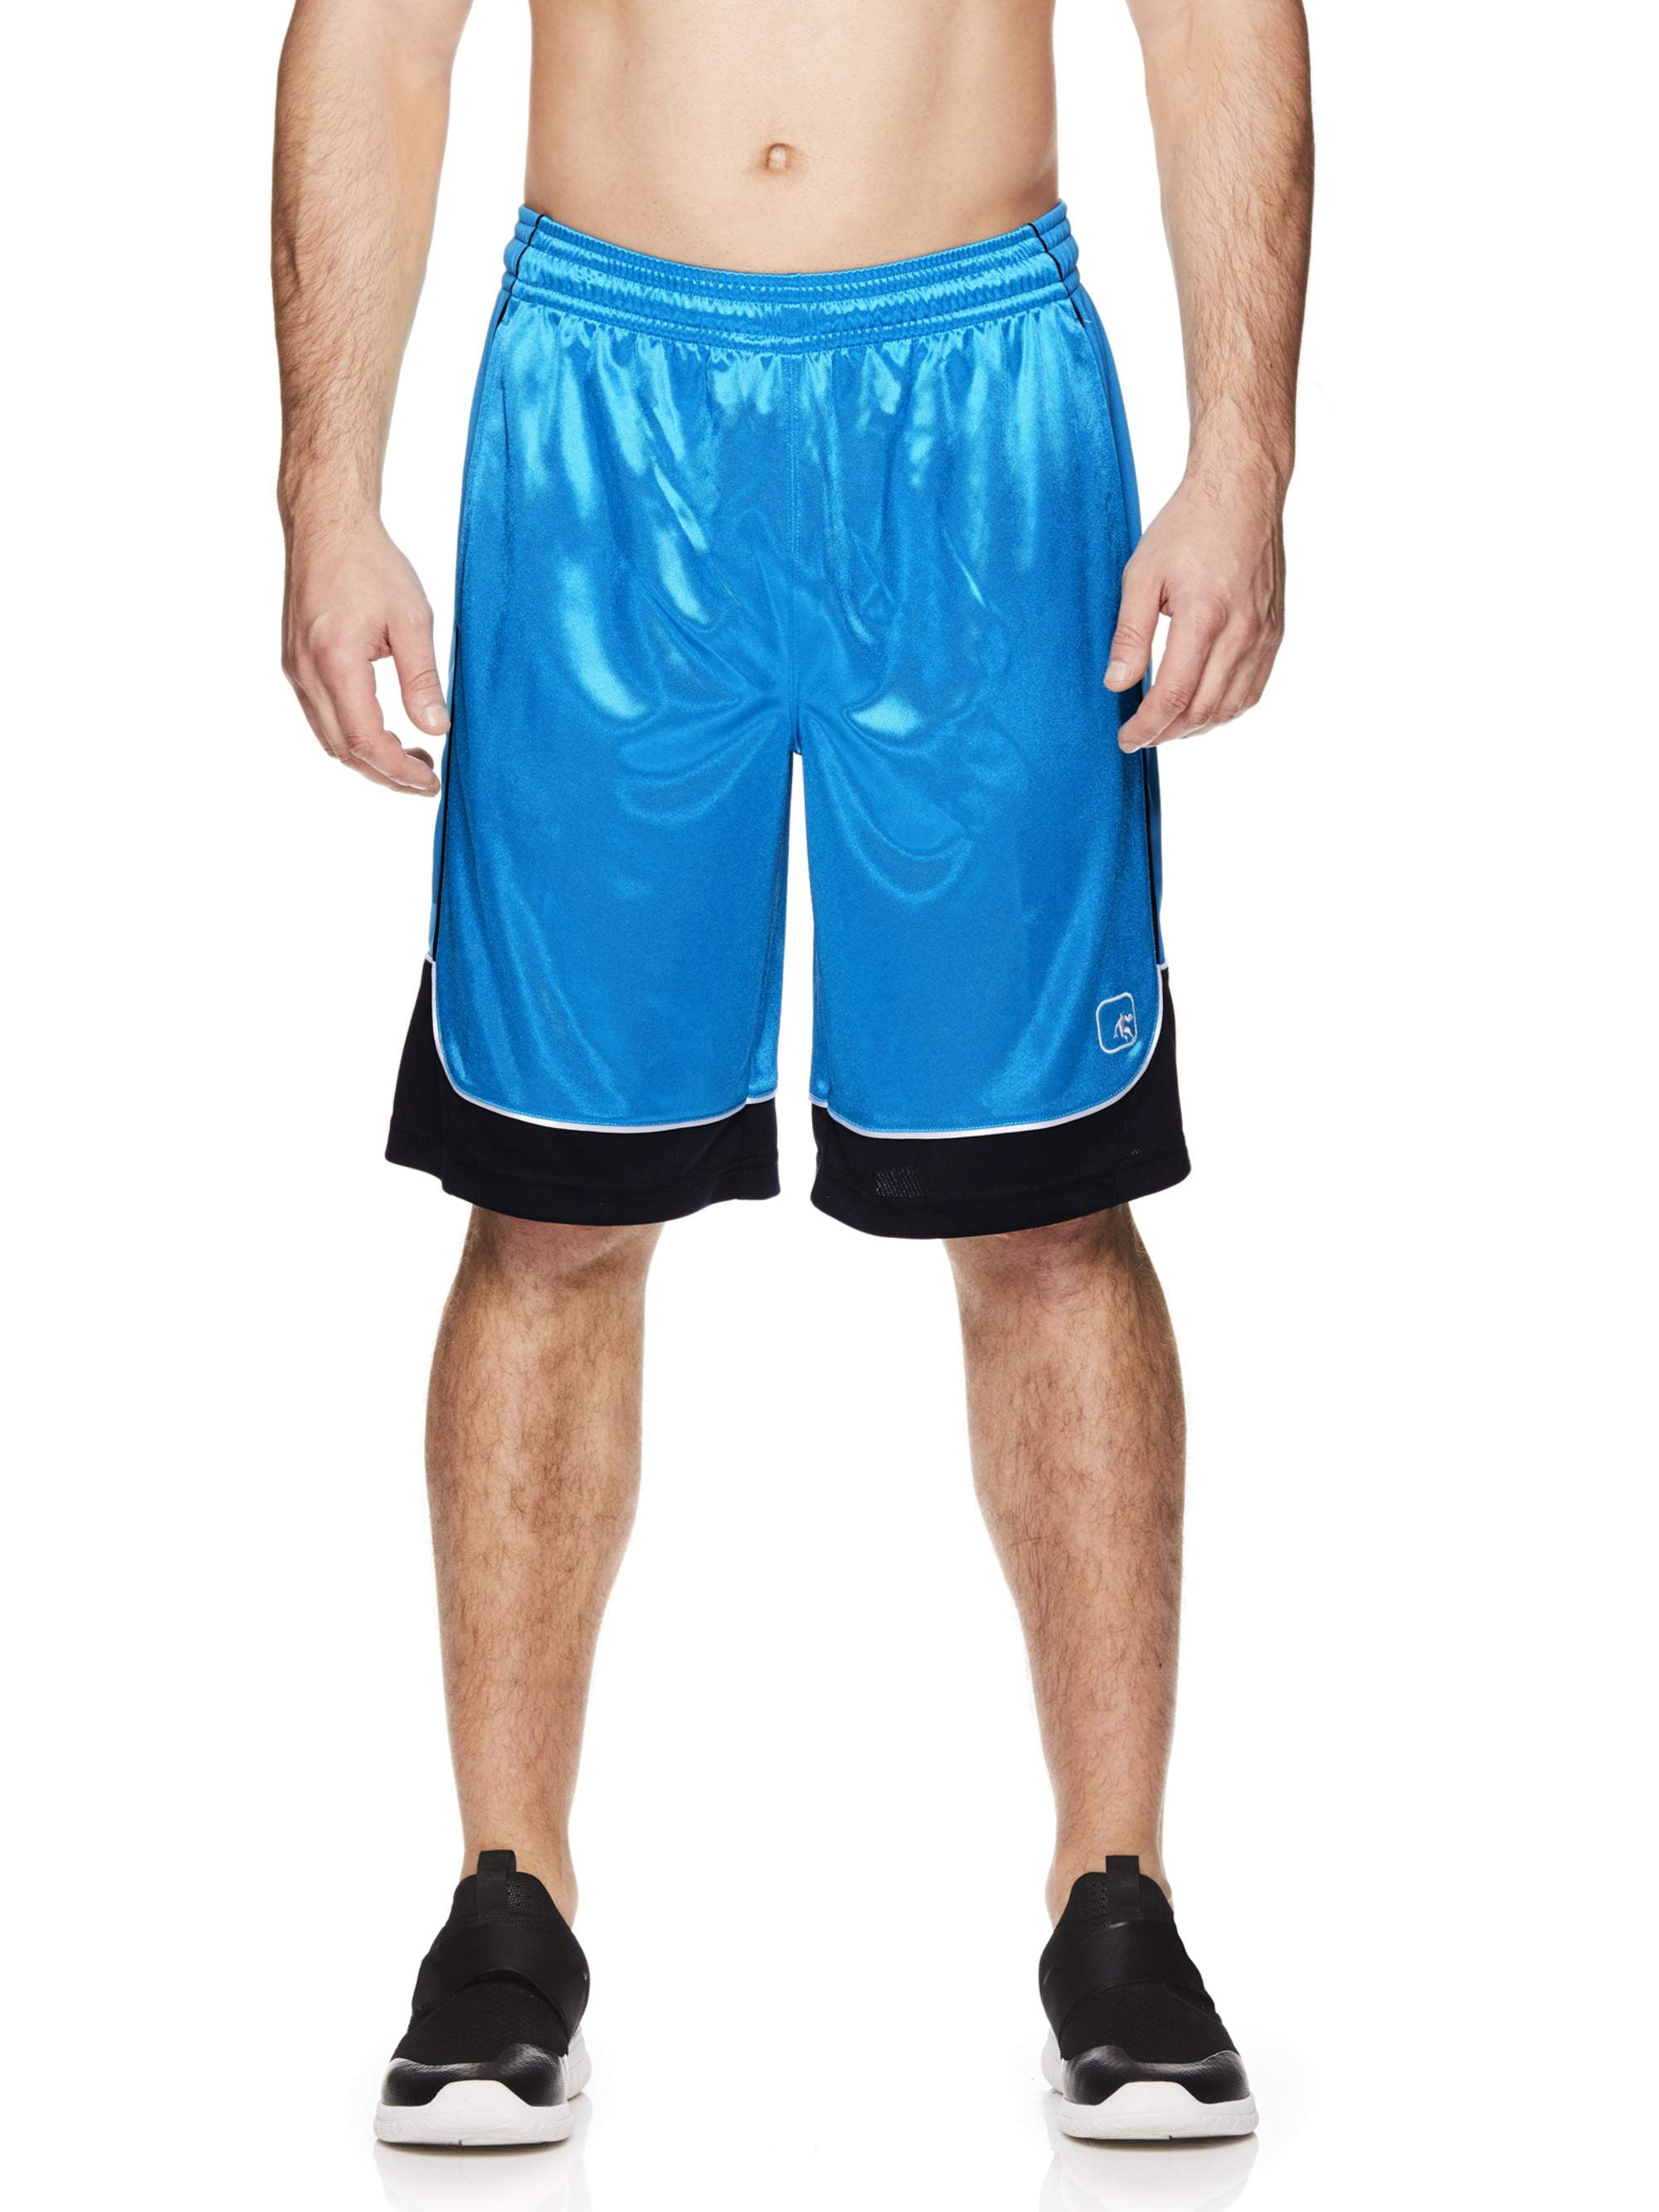 AND1 Men's Colorblock Basketball Shorts, Up to 5XL - Walmart.com